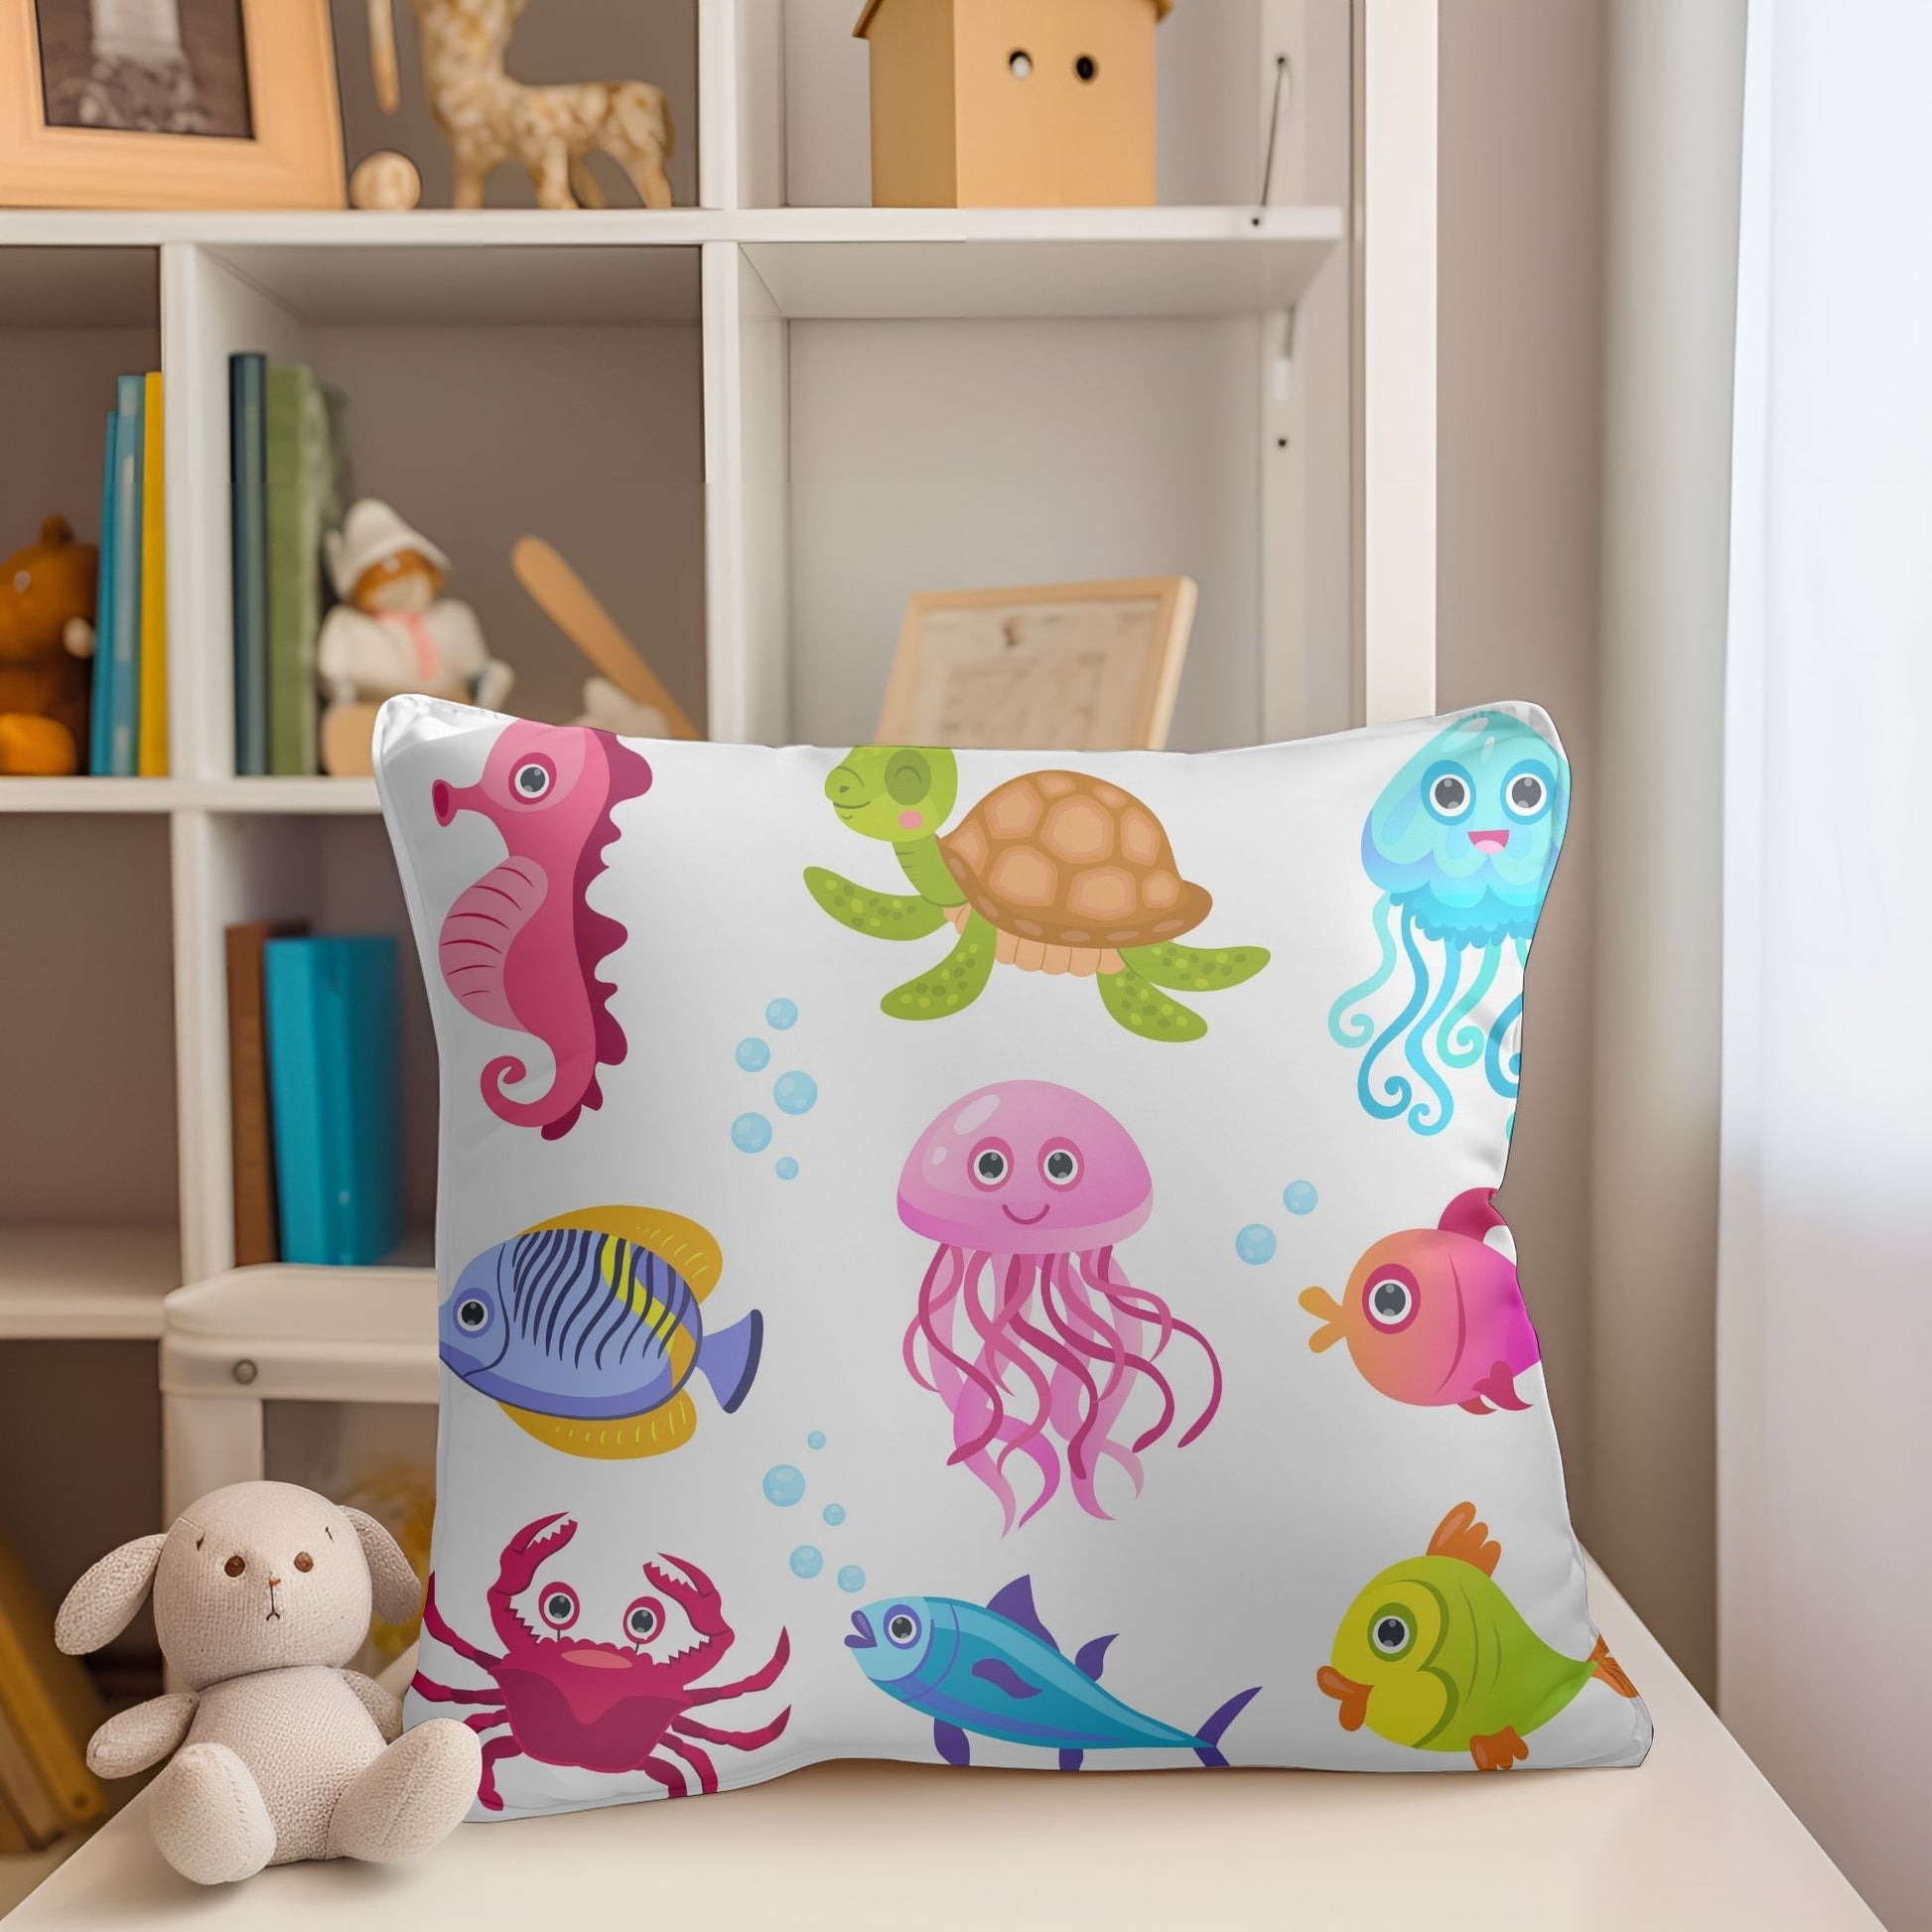 Adorable kids pillow with marine magic design.